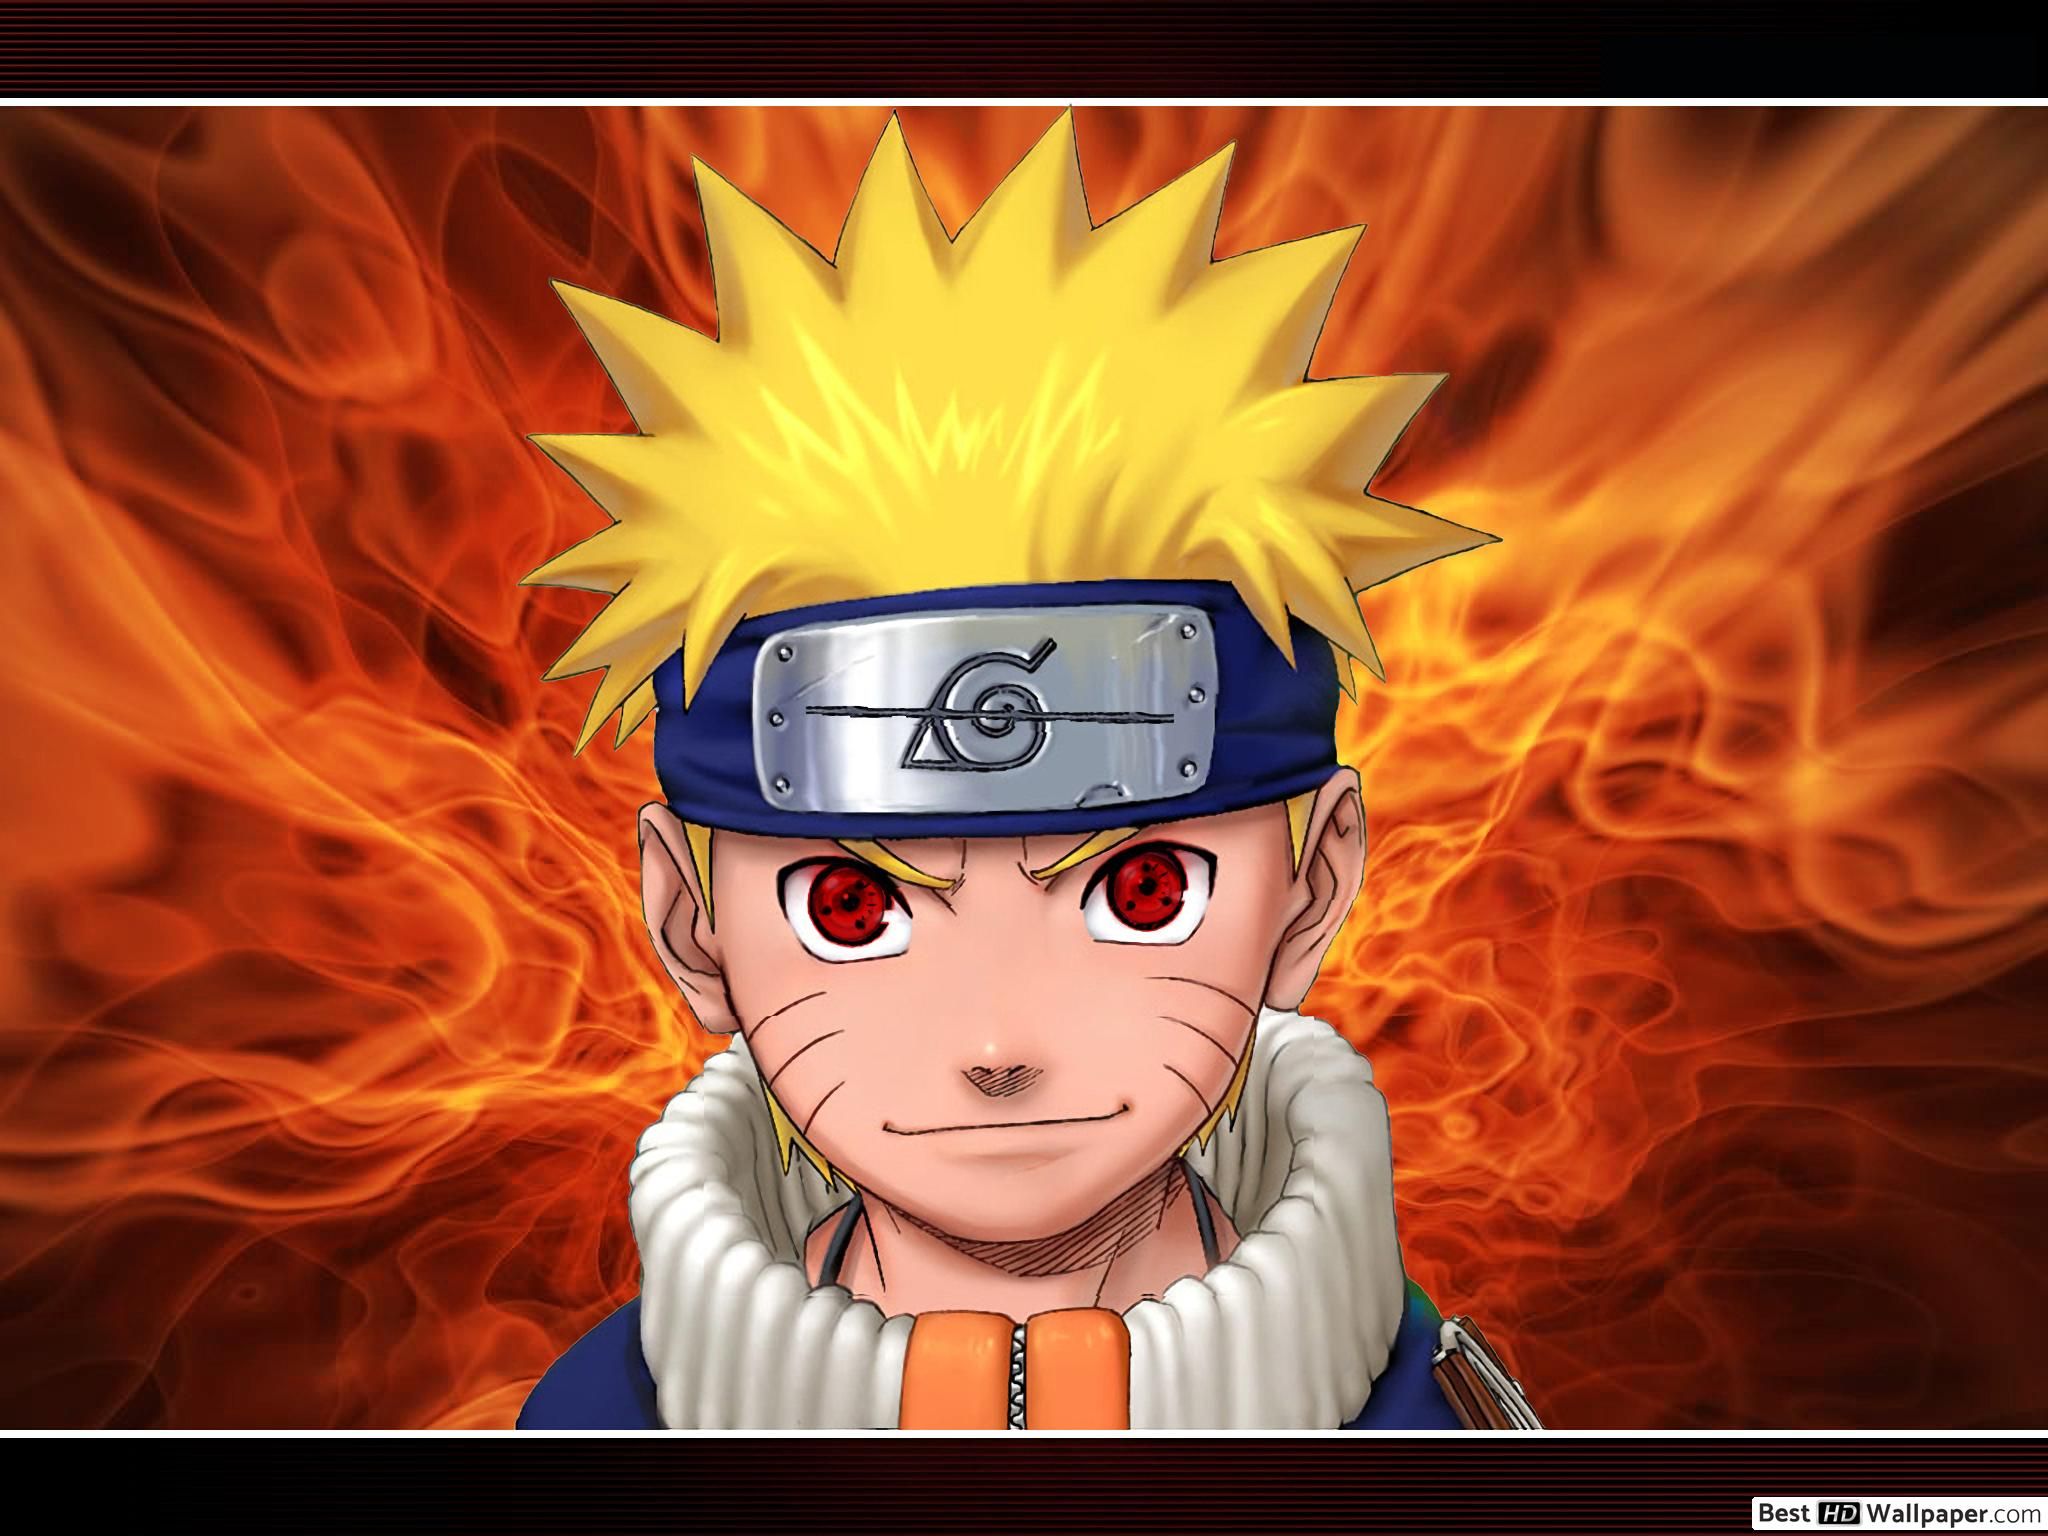 Naruto Uzumaki poster HD wallpaper download